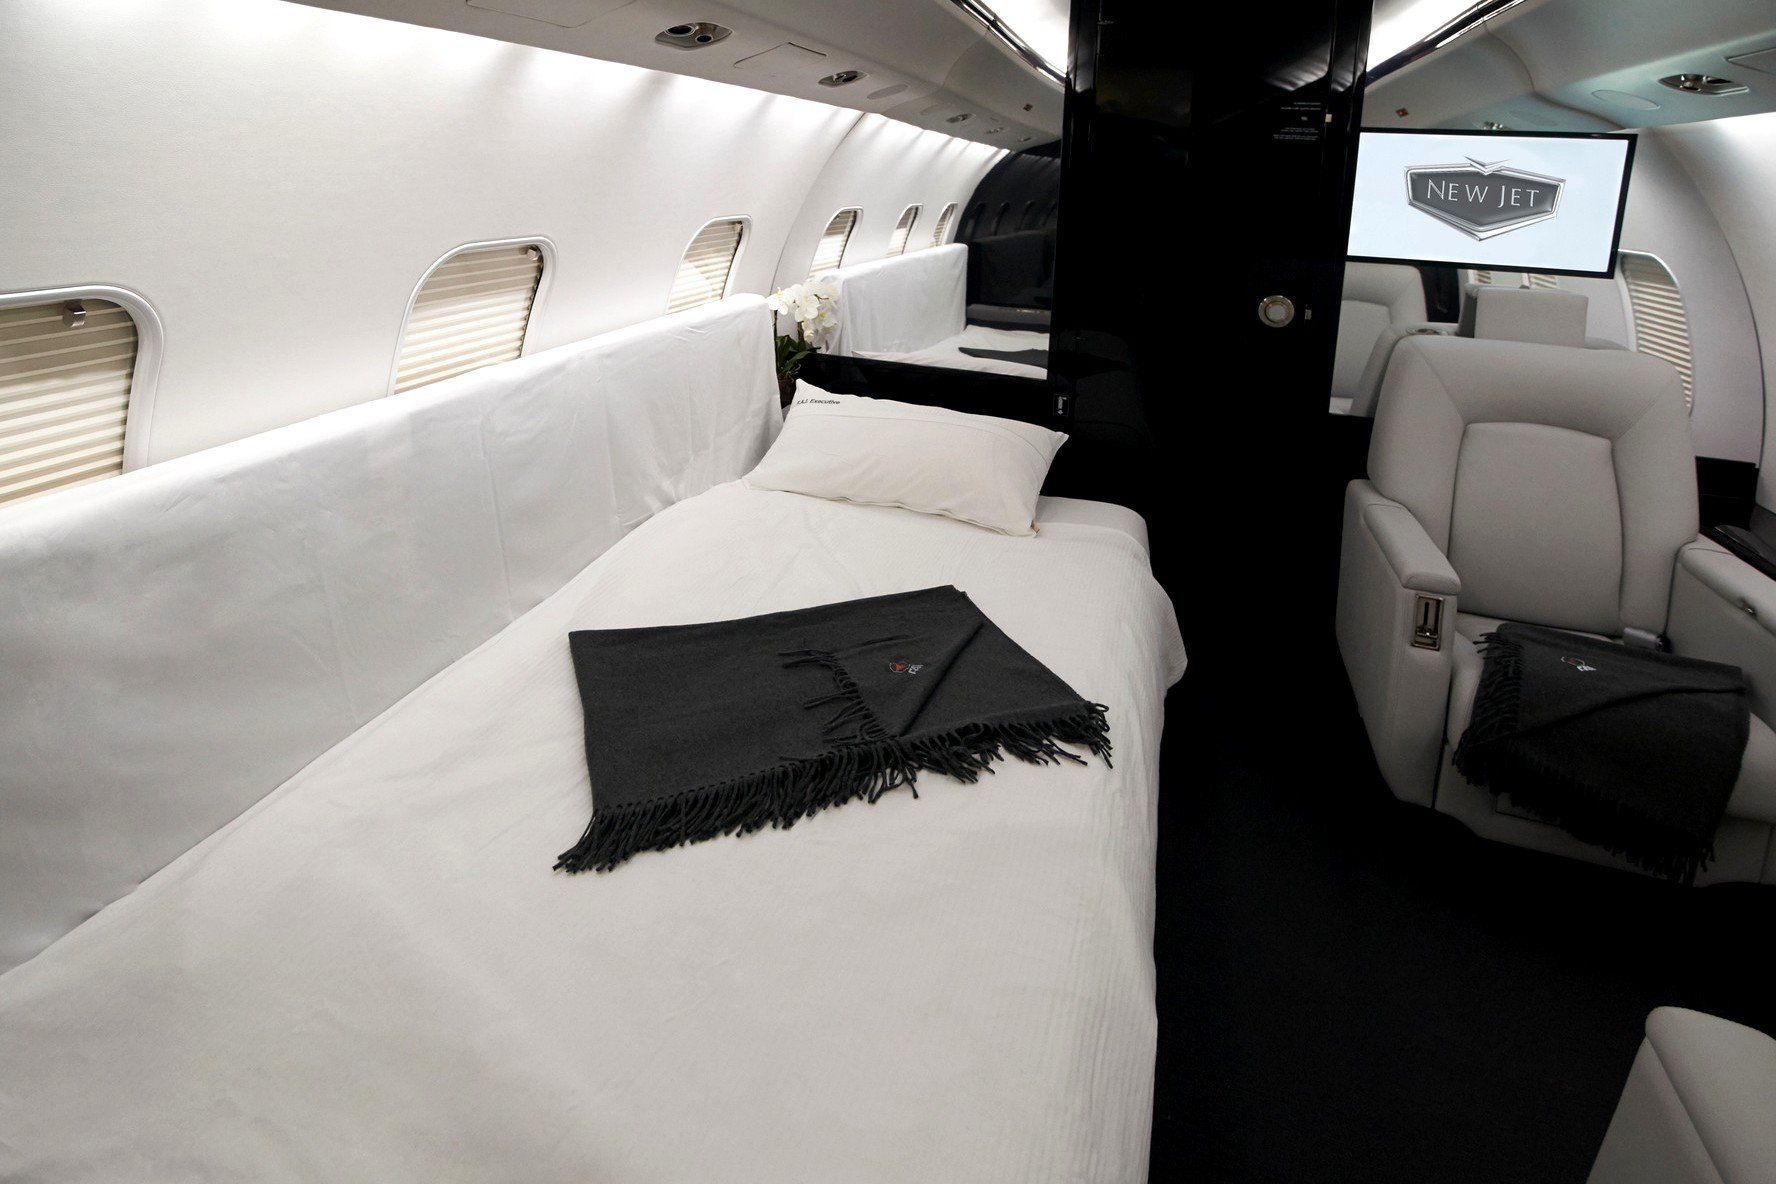 inside private jet bedroom